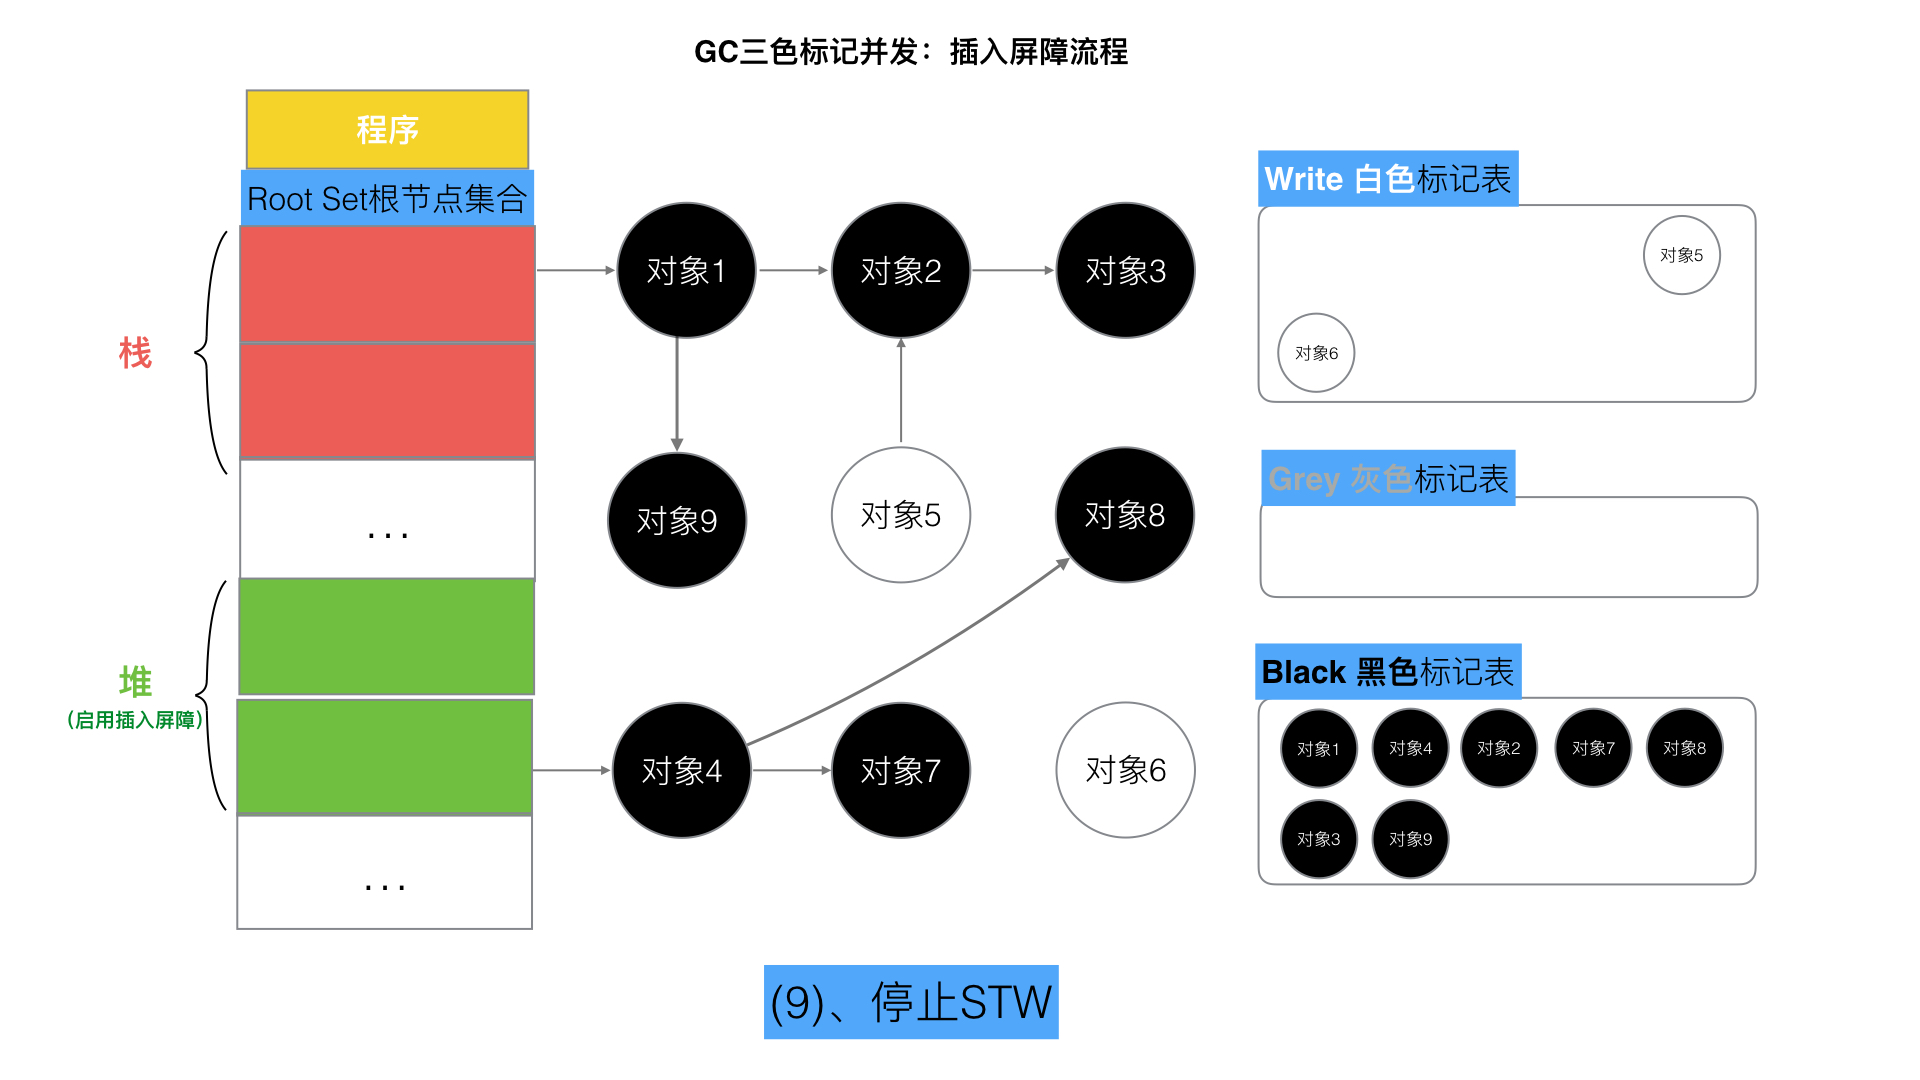 5、Golang三色标记+混合写屏障GC模式全分析 - 图29